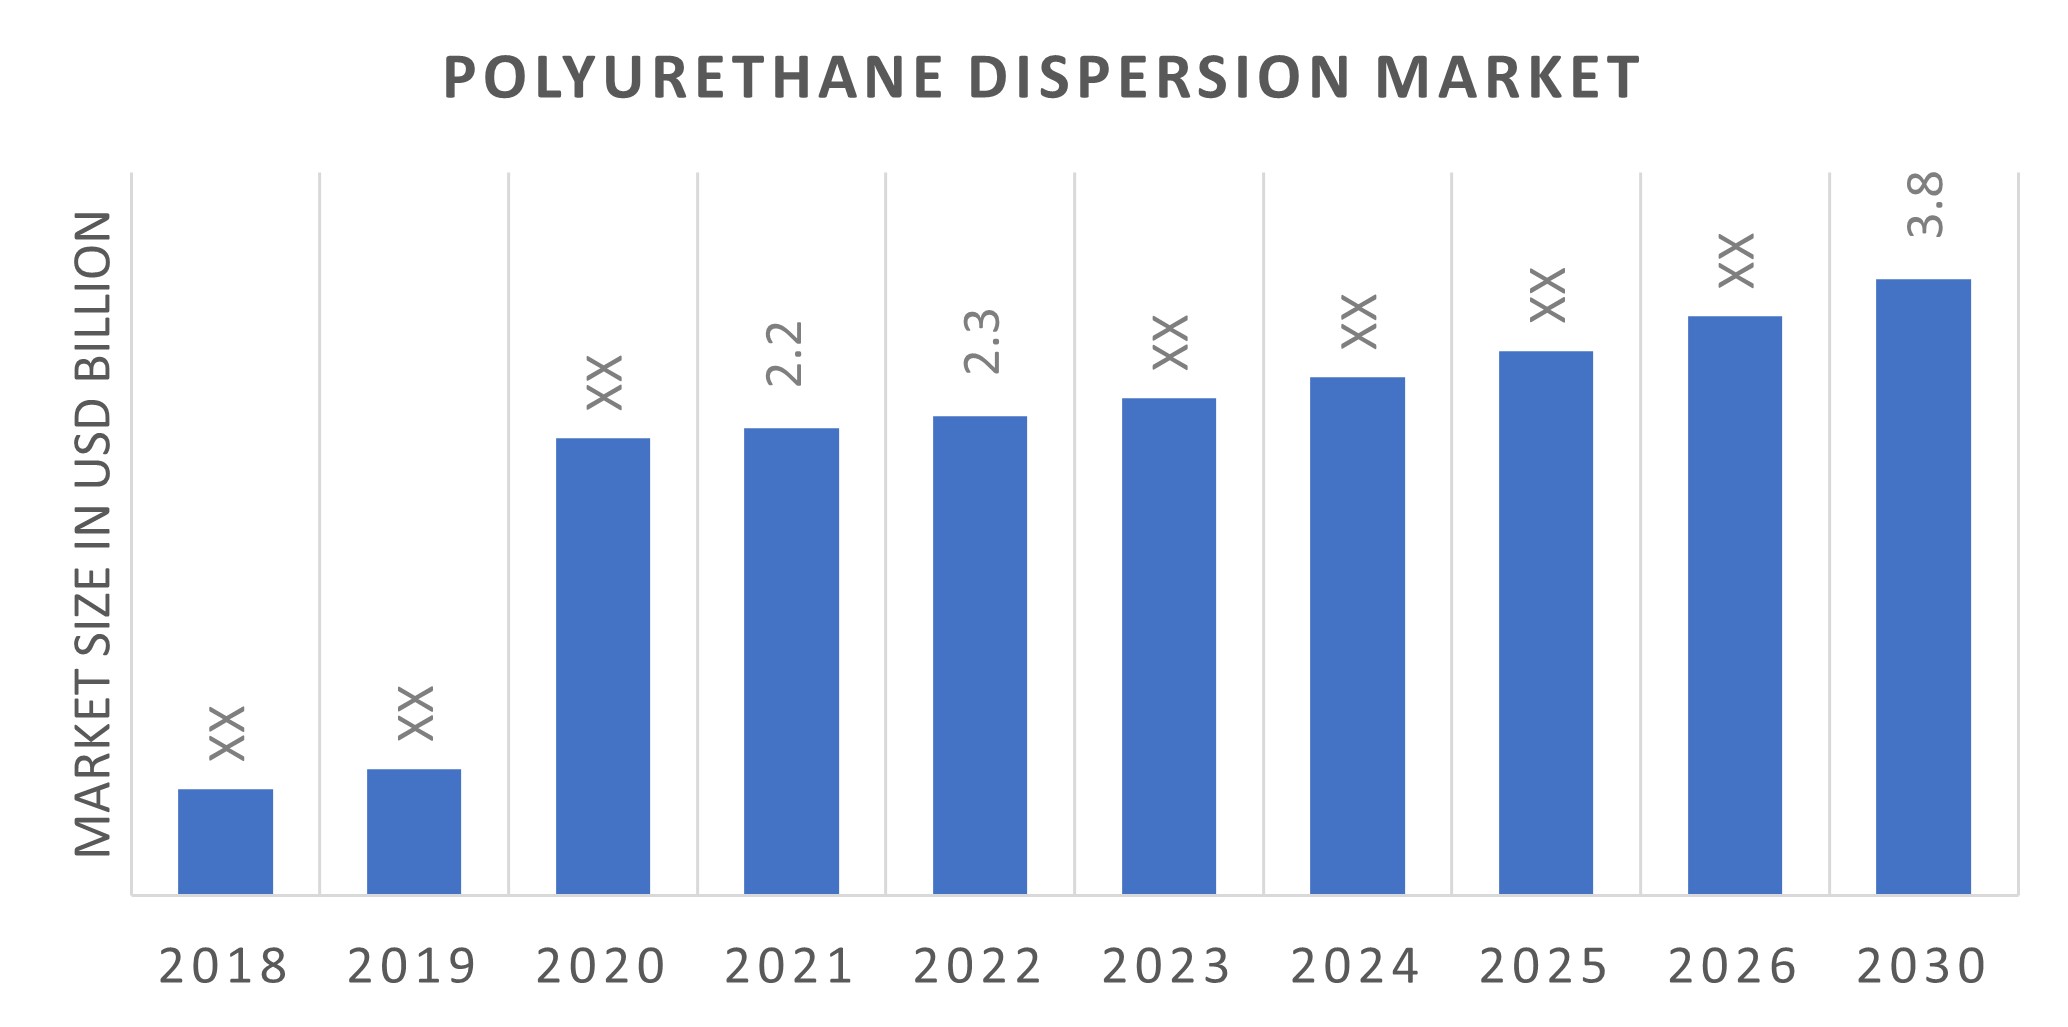 Global Polyurethane Dispersion Market